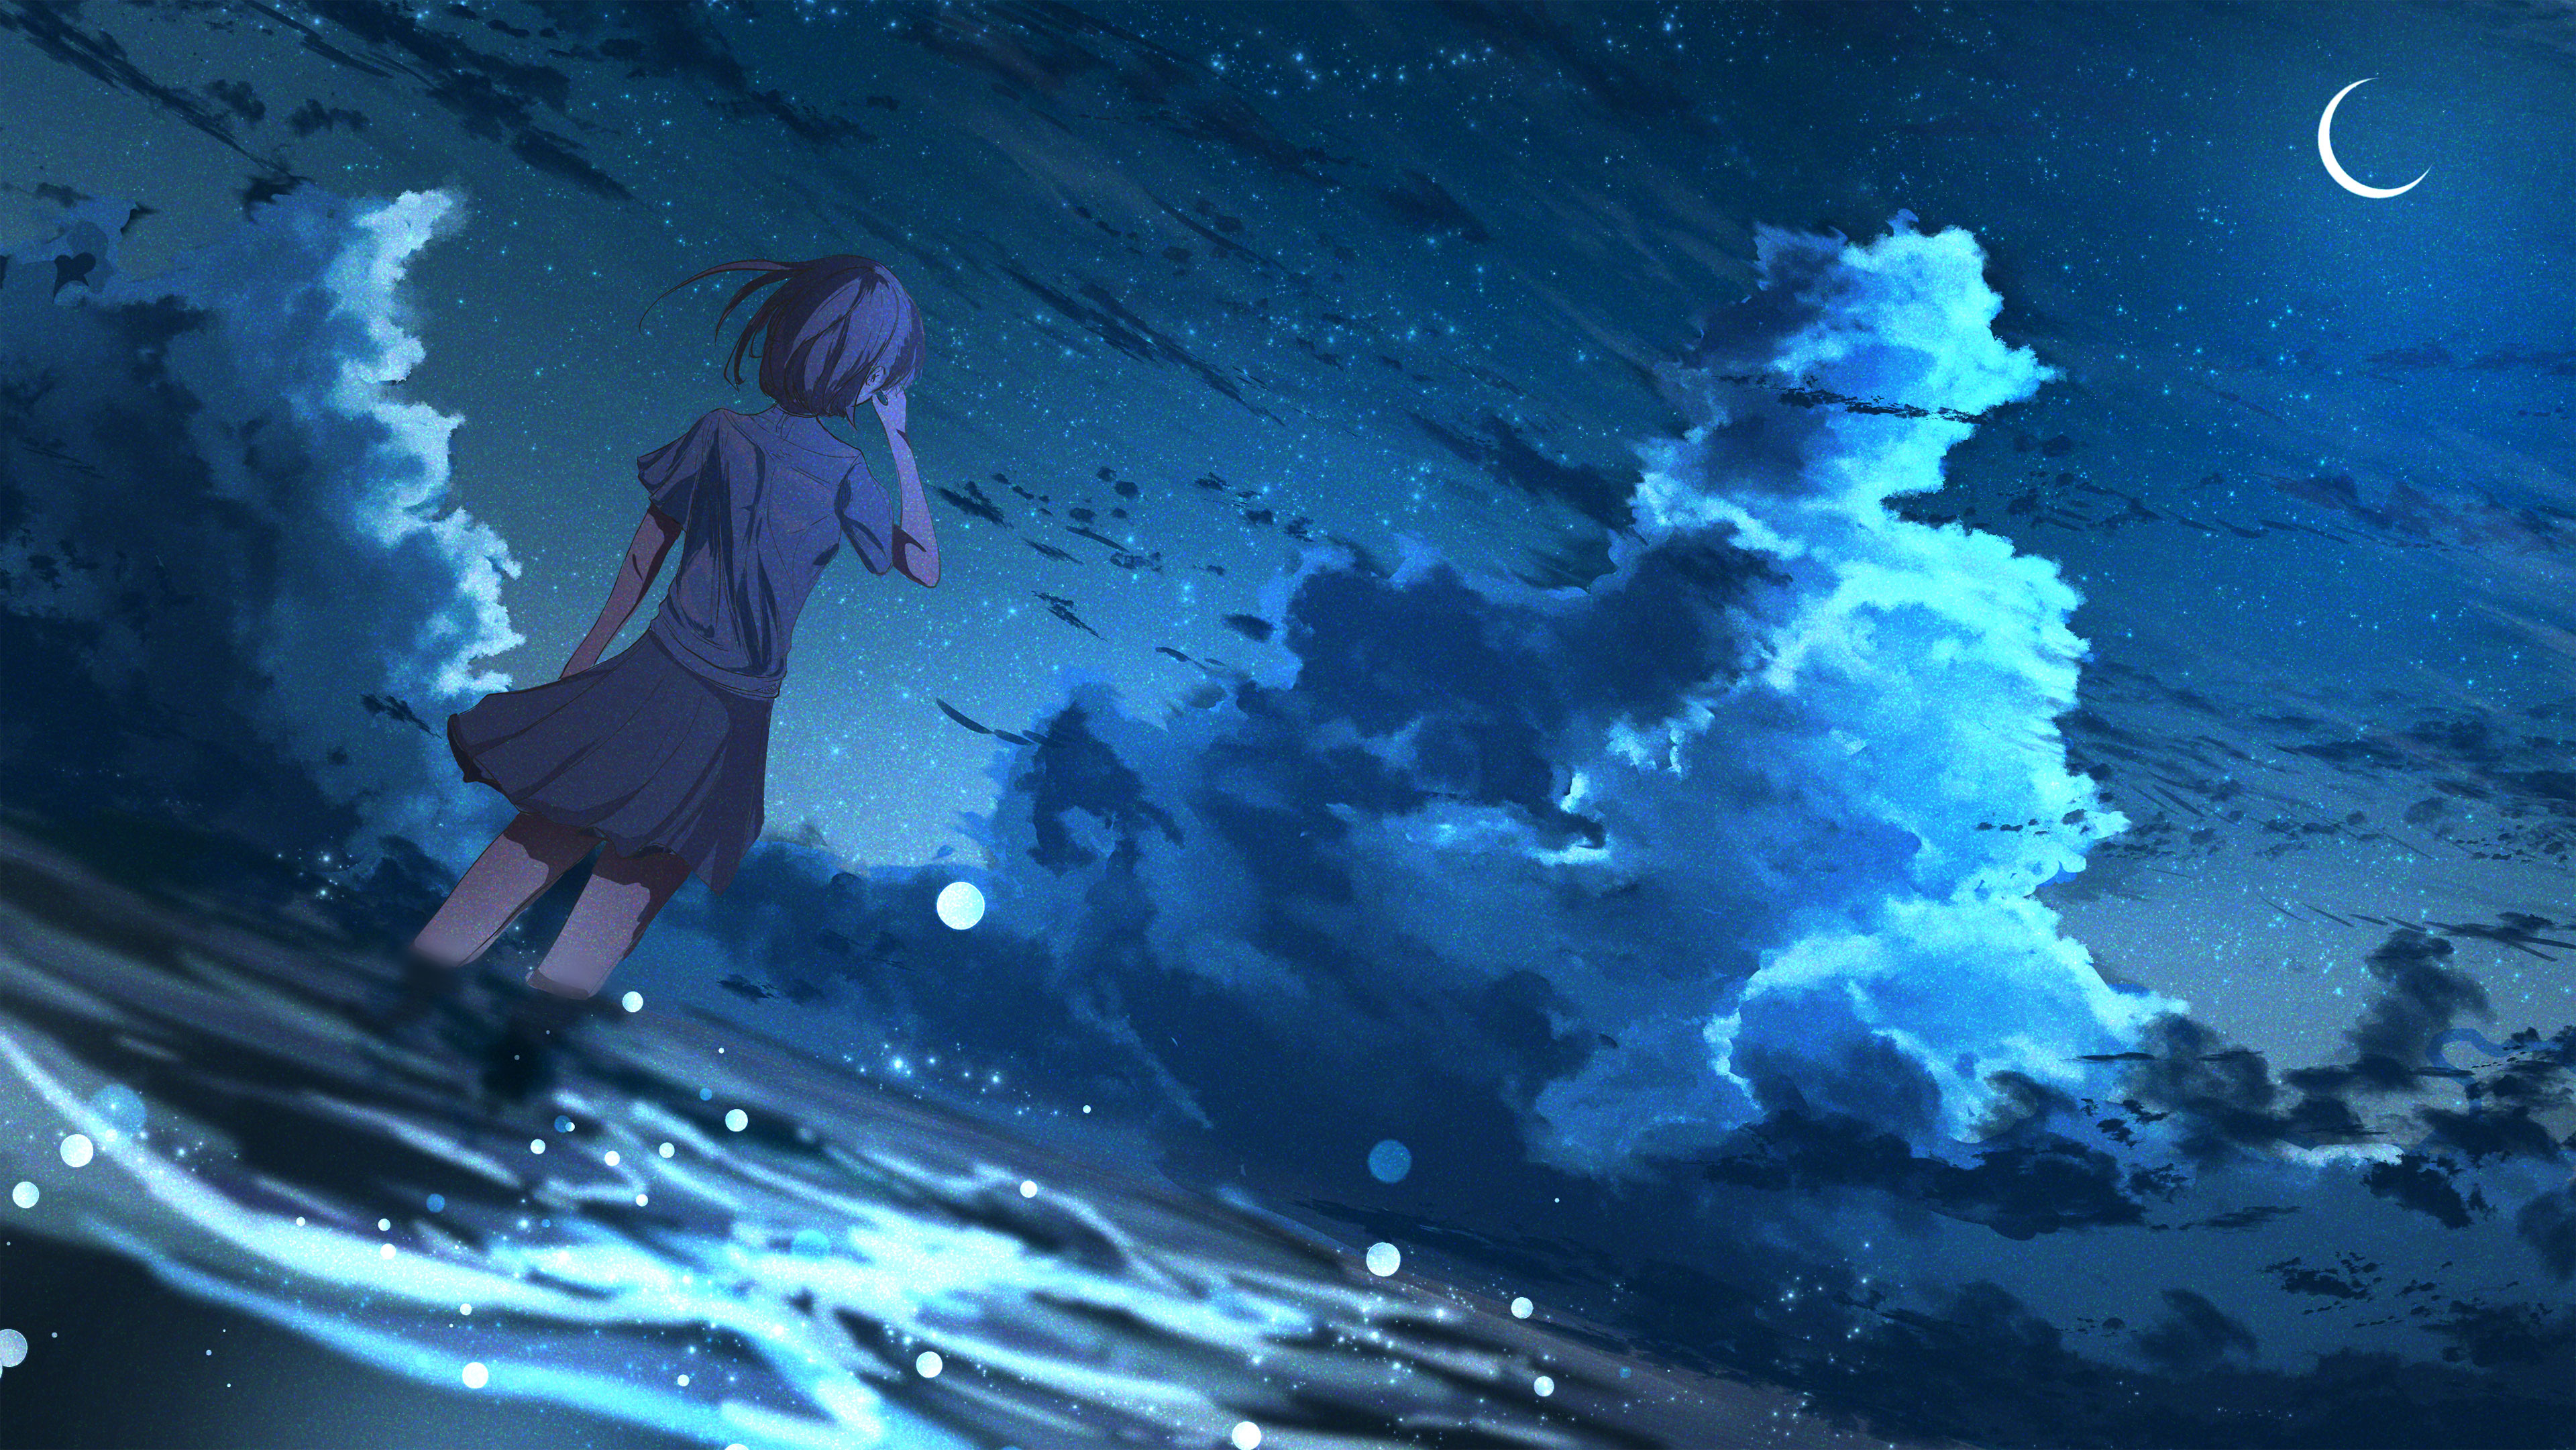 Anime Girl in Half Moon Night 4K Wallpaper, HD Anime 4K Wallpapers ...